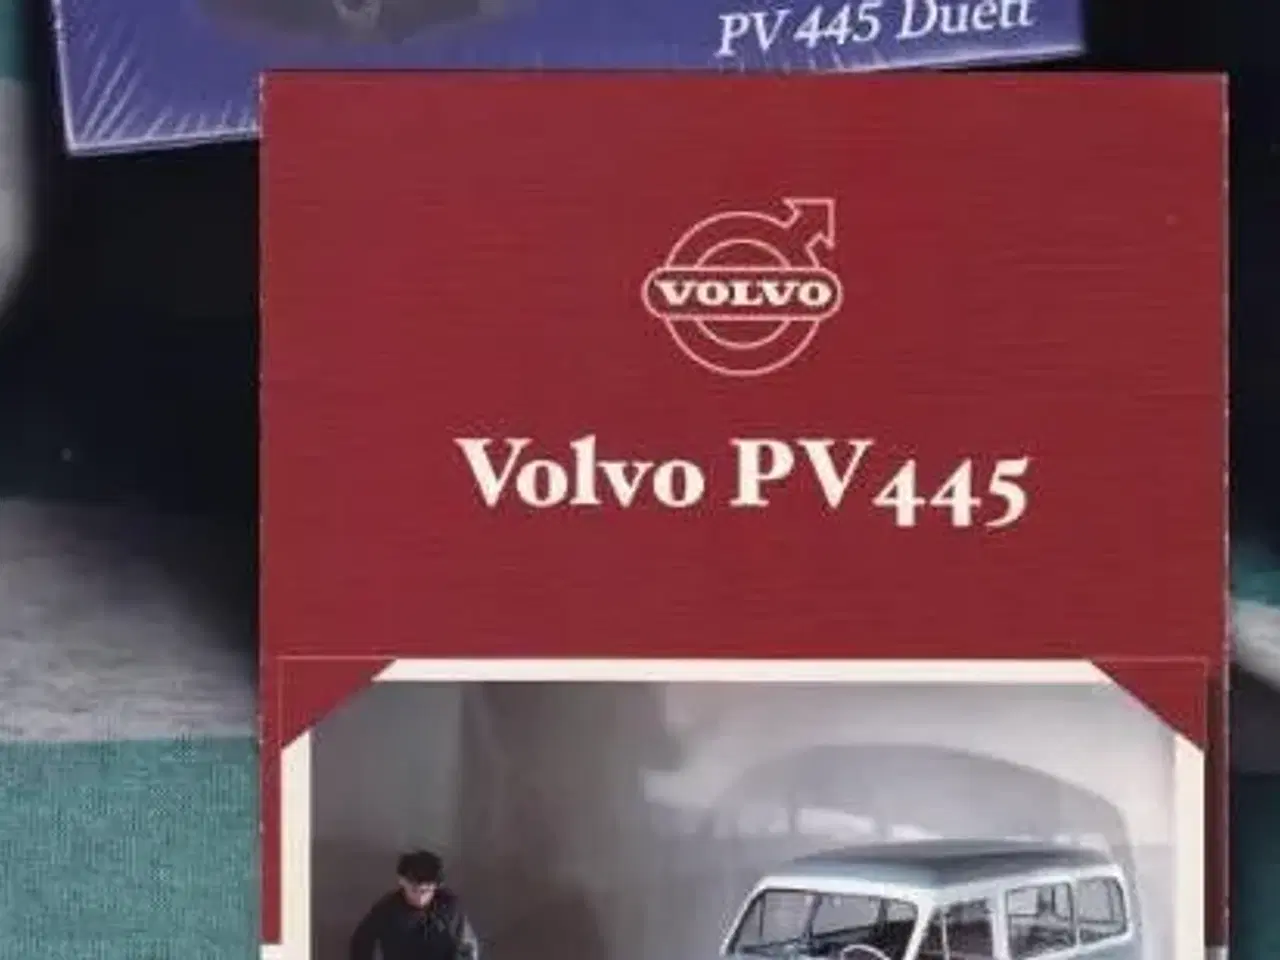 Billede 1 - Volvo PV445 Duett (Volvo Car Collection) 